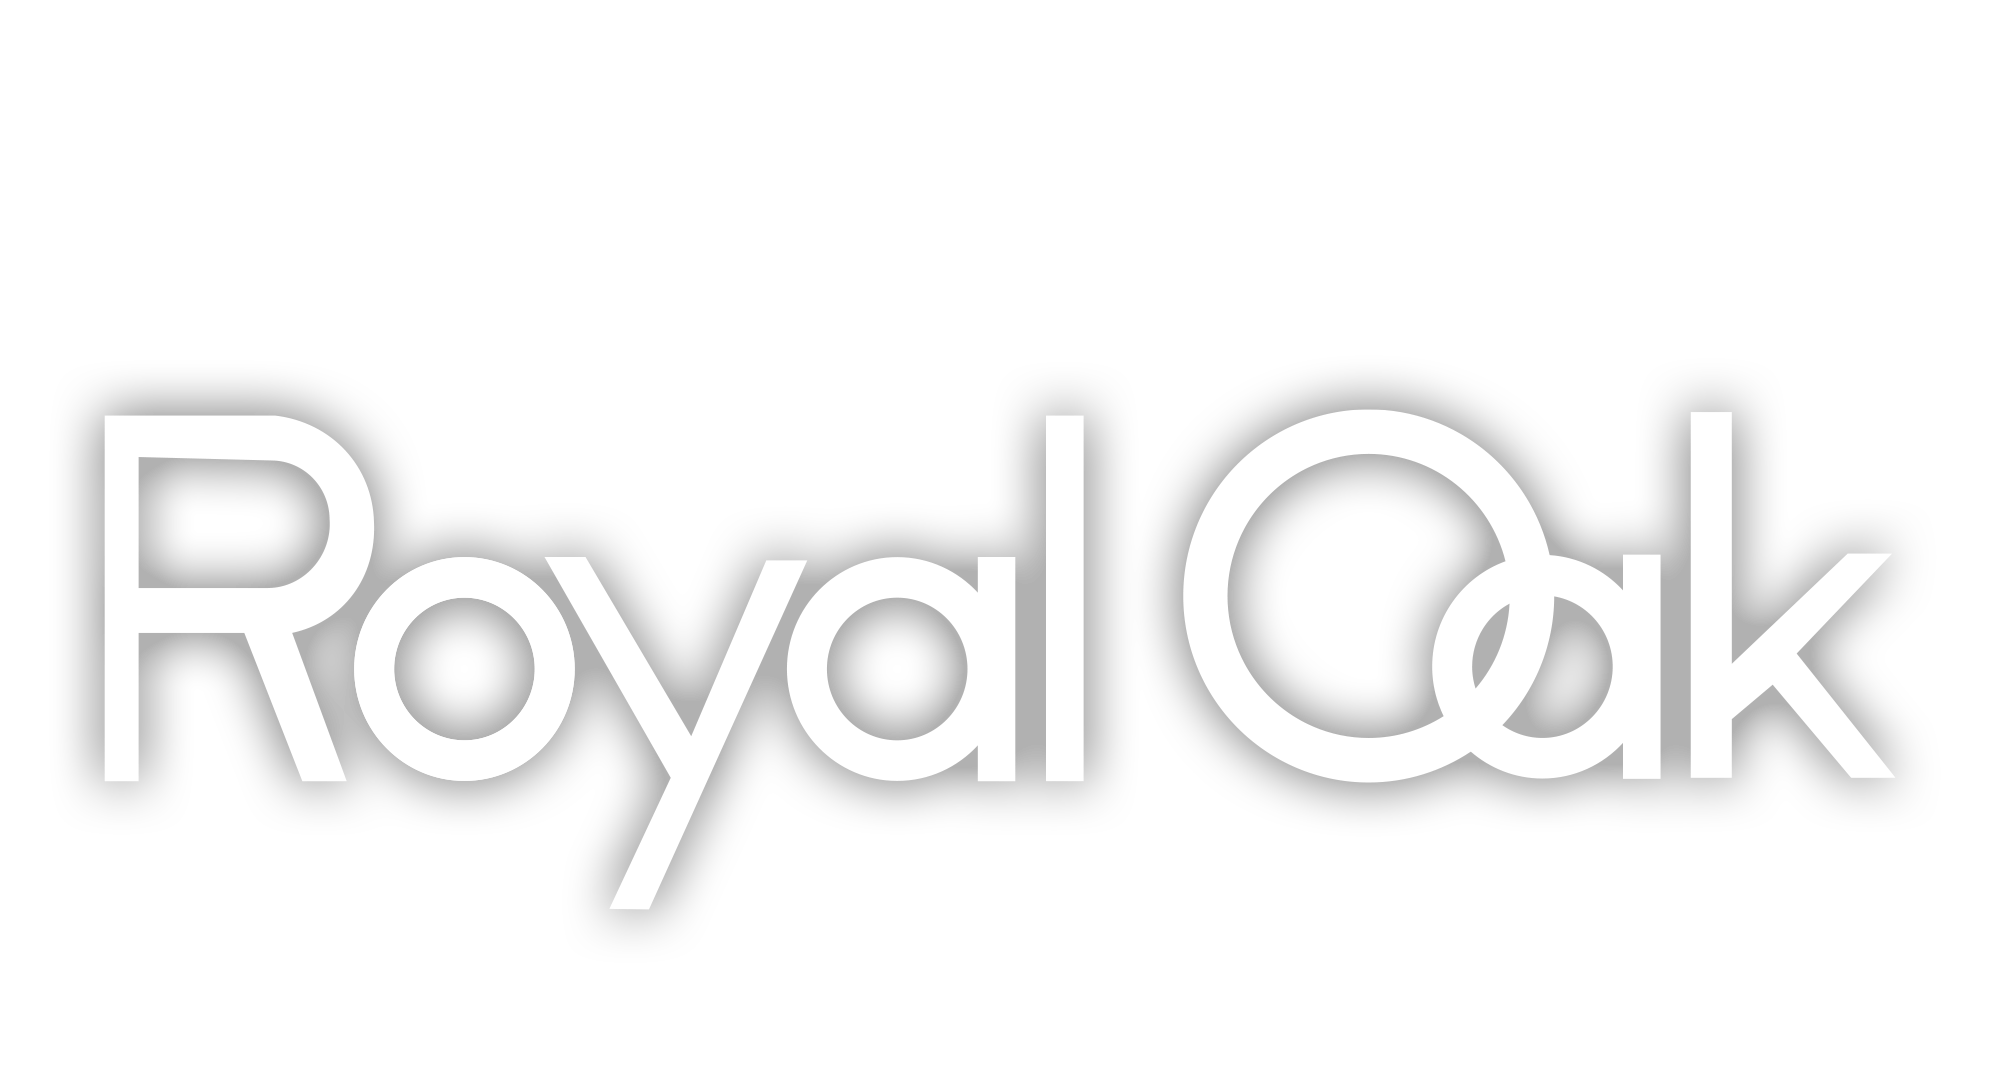 Collection Royal Oak